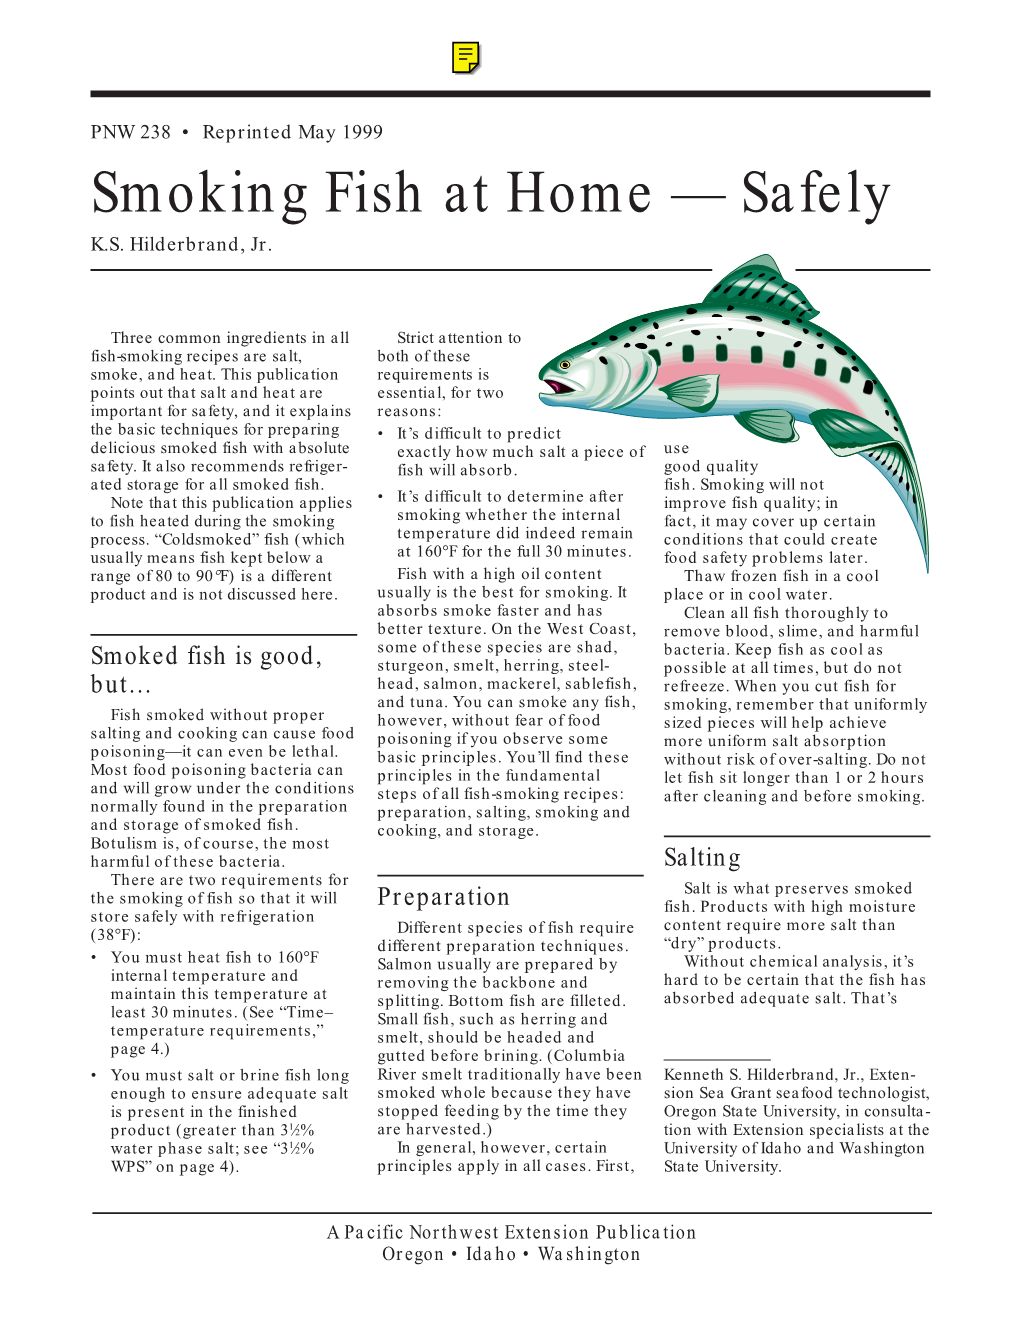 Smoking Fish at Home Safely